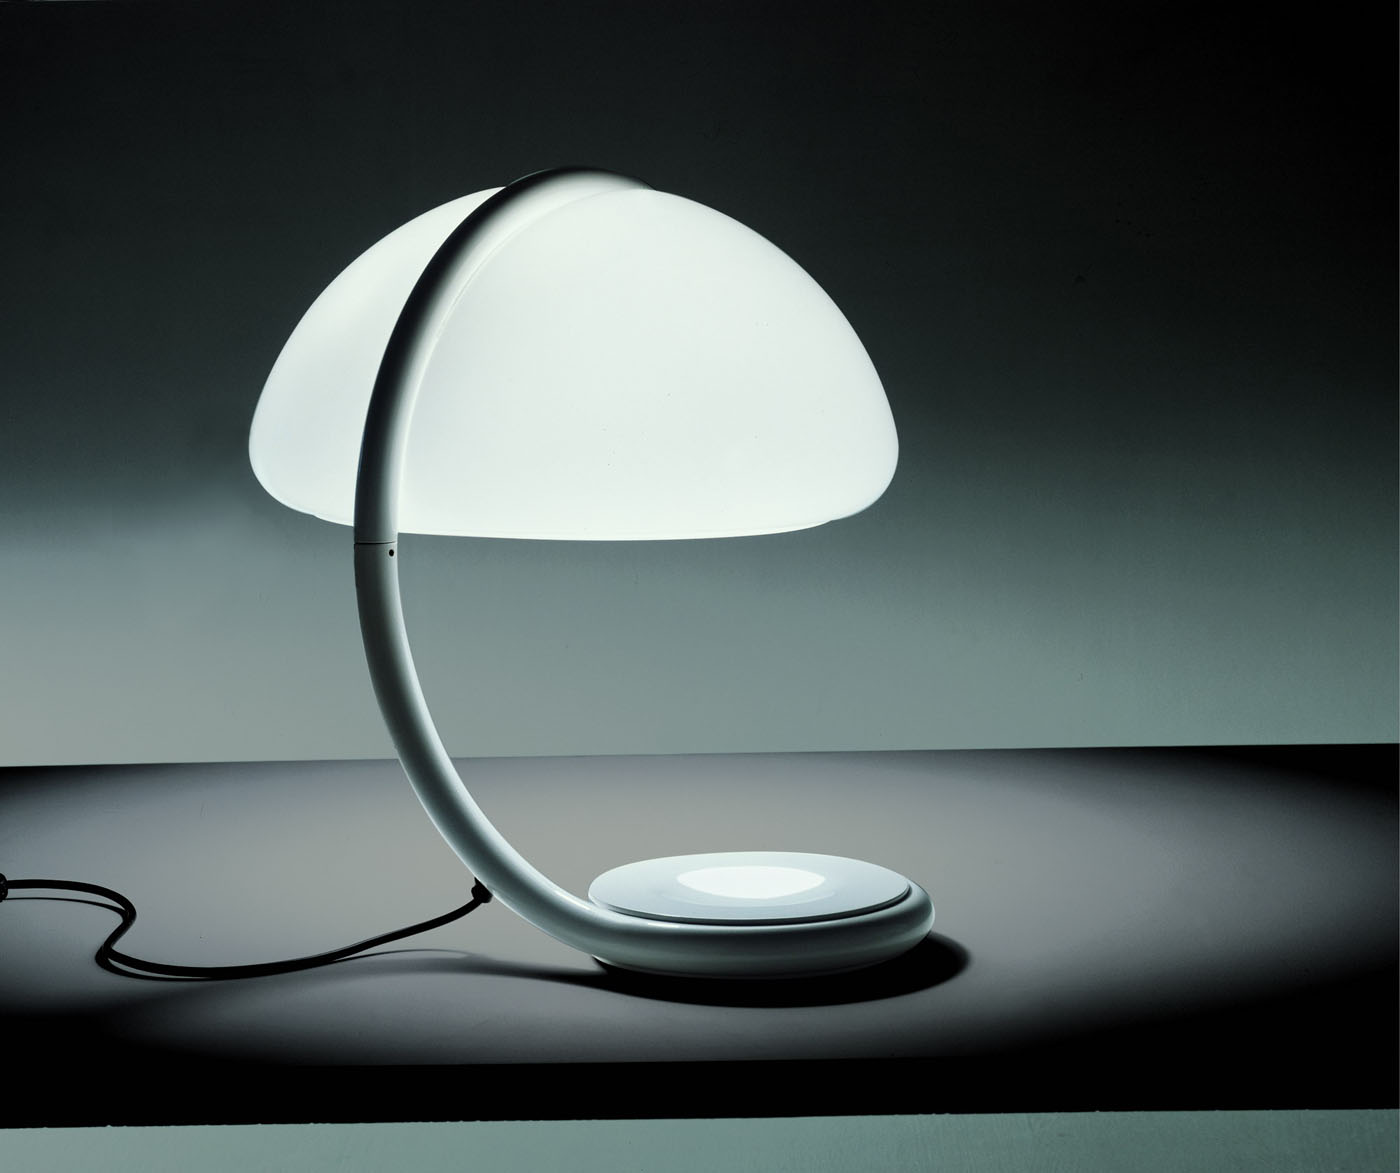 Modern Design Table Lamp photo - 5